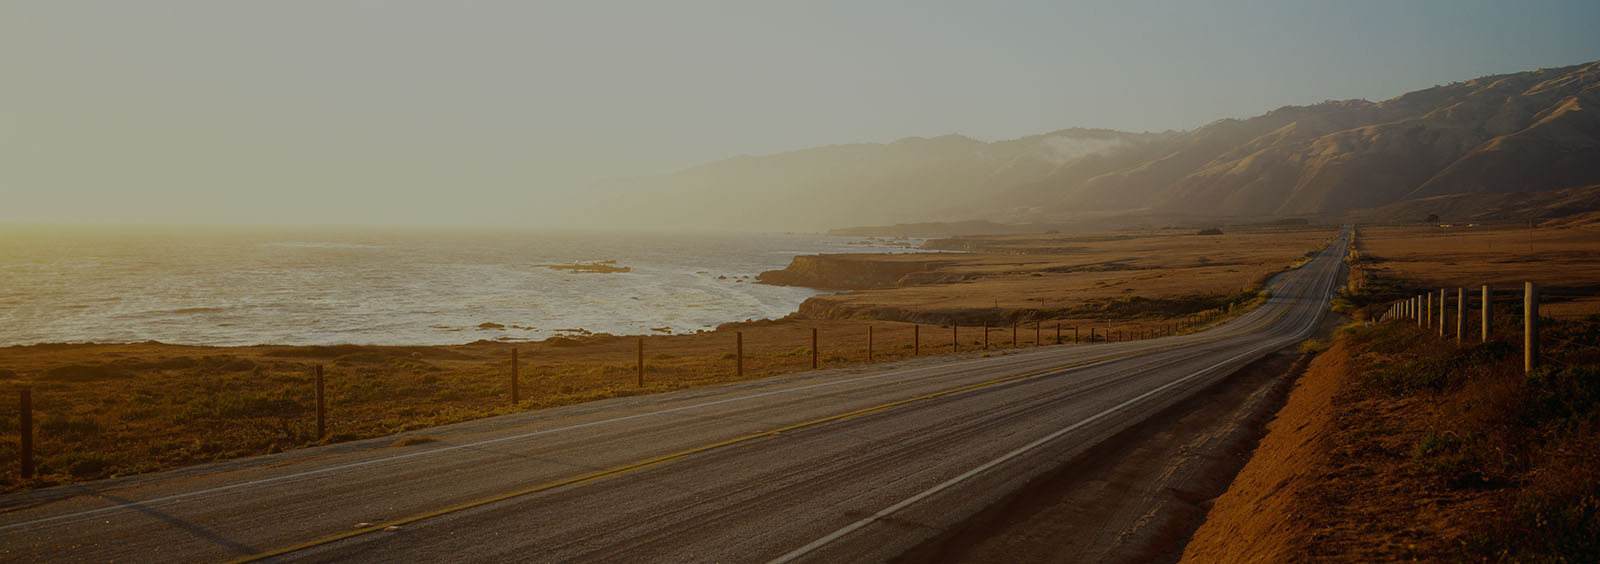 Pacific Coast Highway